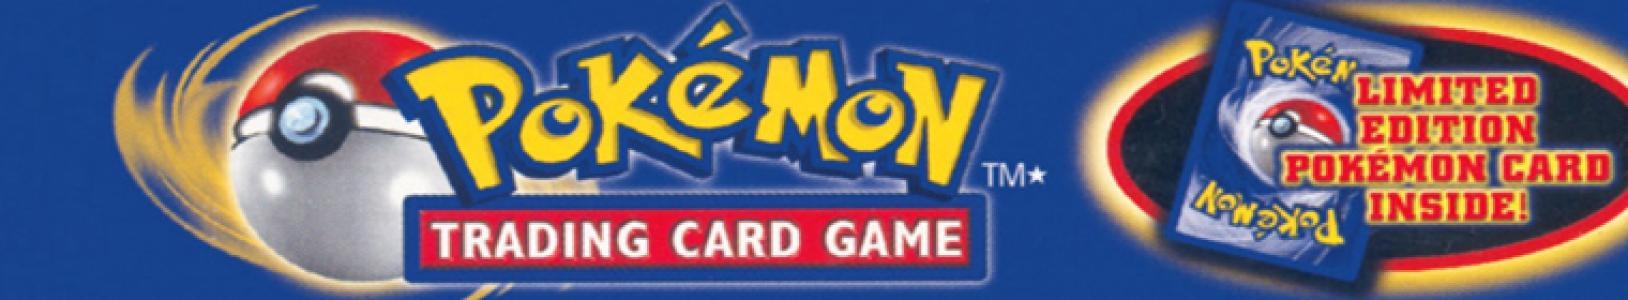 Pokémon Trading Card Game banner